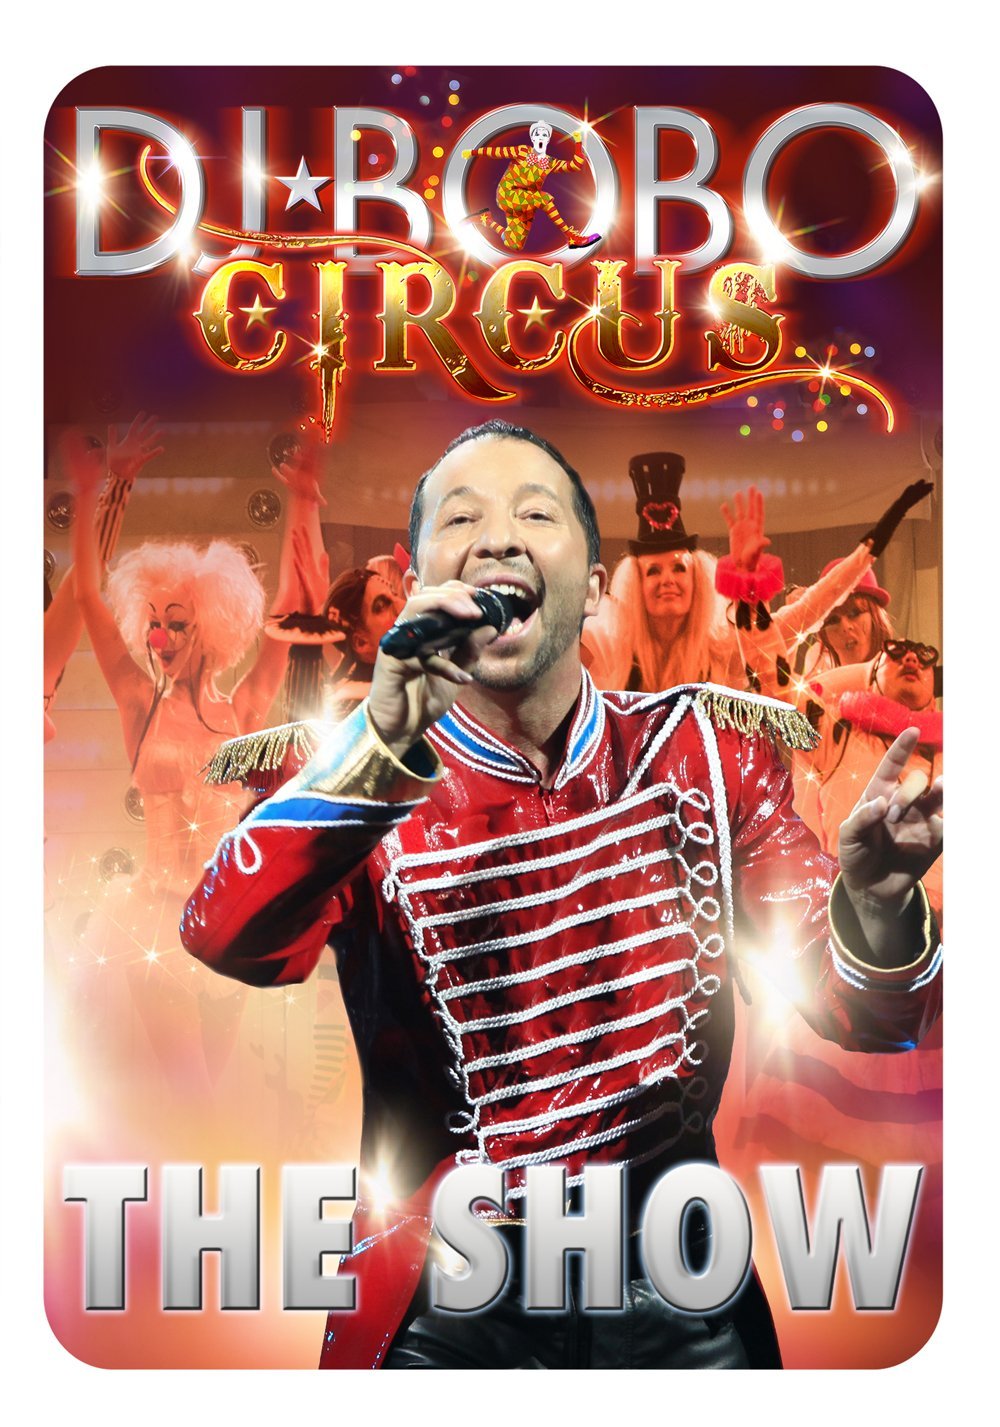 Circus show DJ BOBO